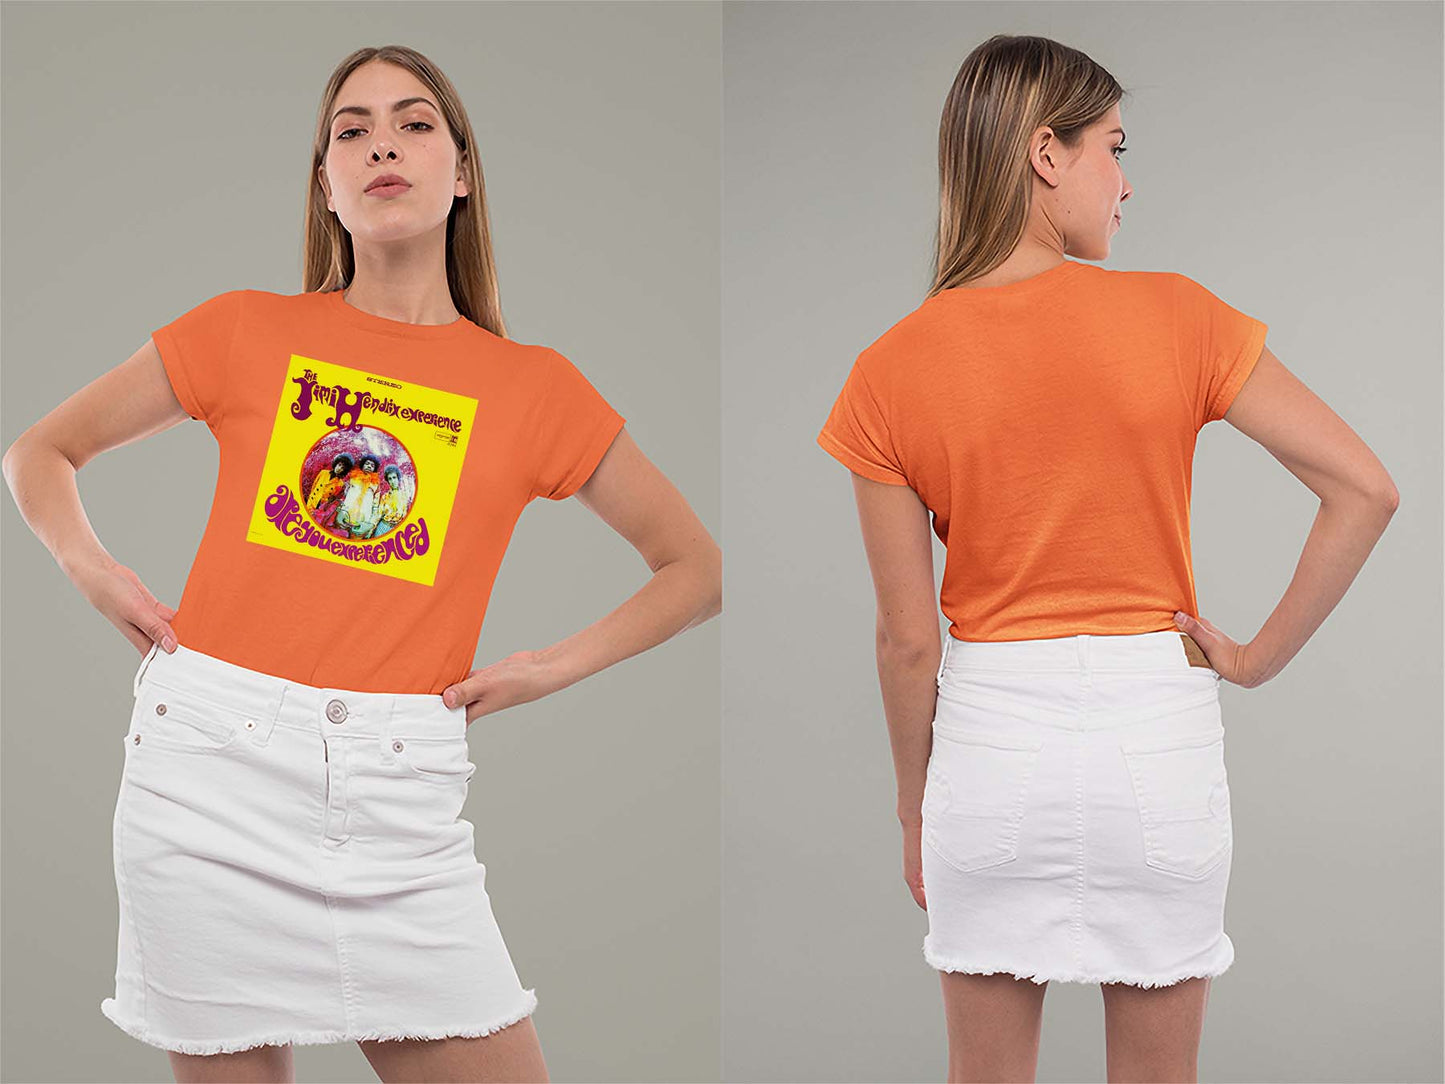 Are You Experienced Ladies Crew (Round) Neck Shirt Small Orange